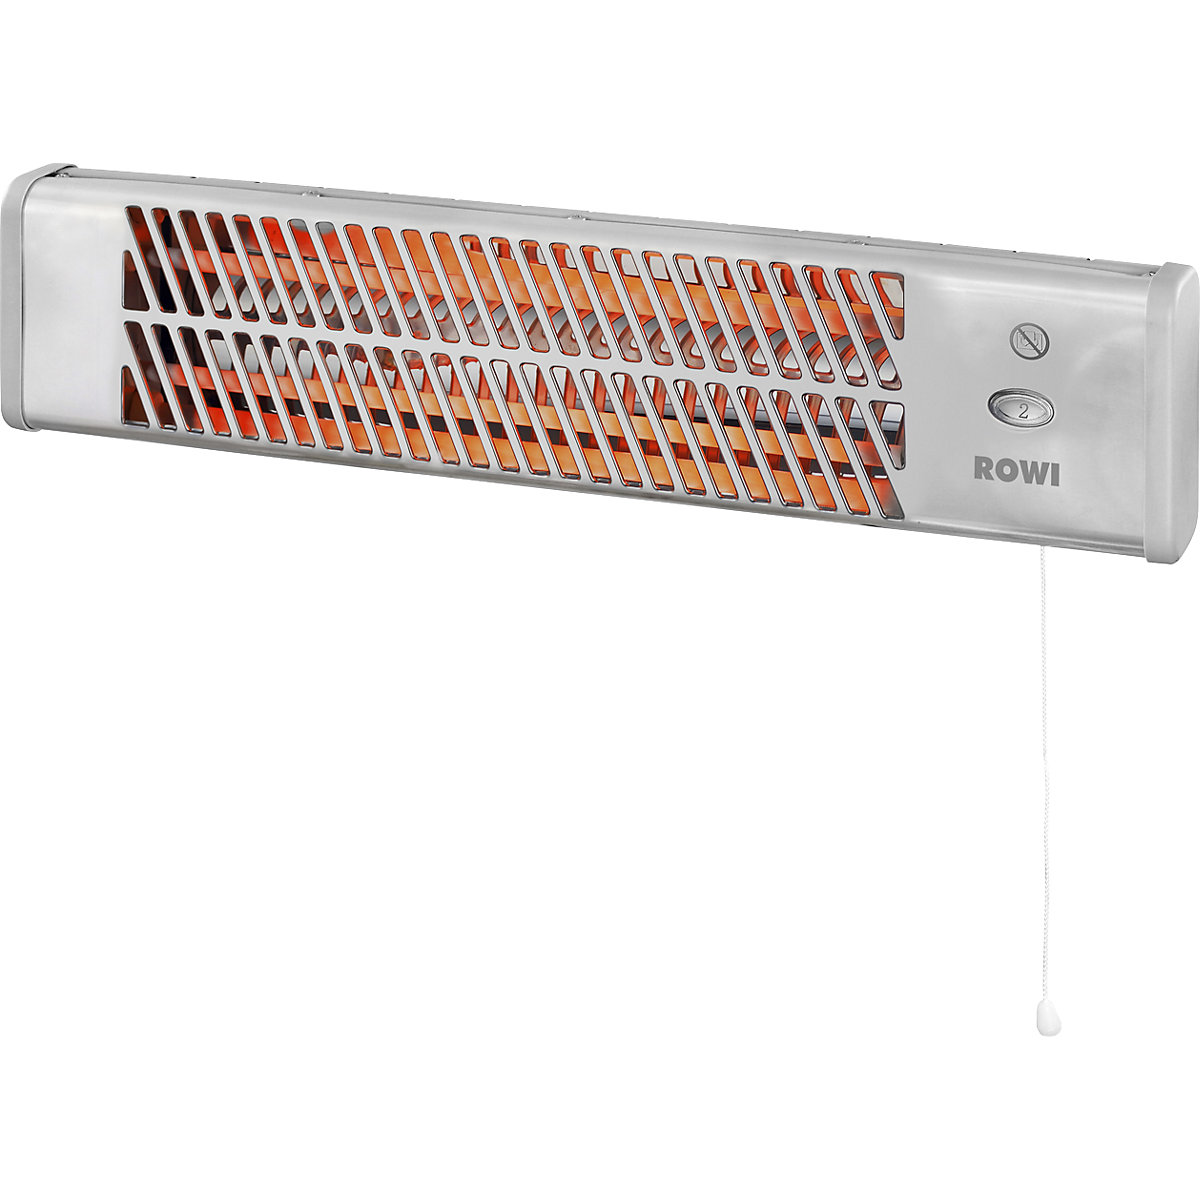 Infrared short wave radiant heater